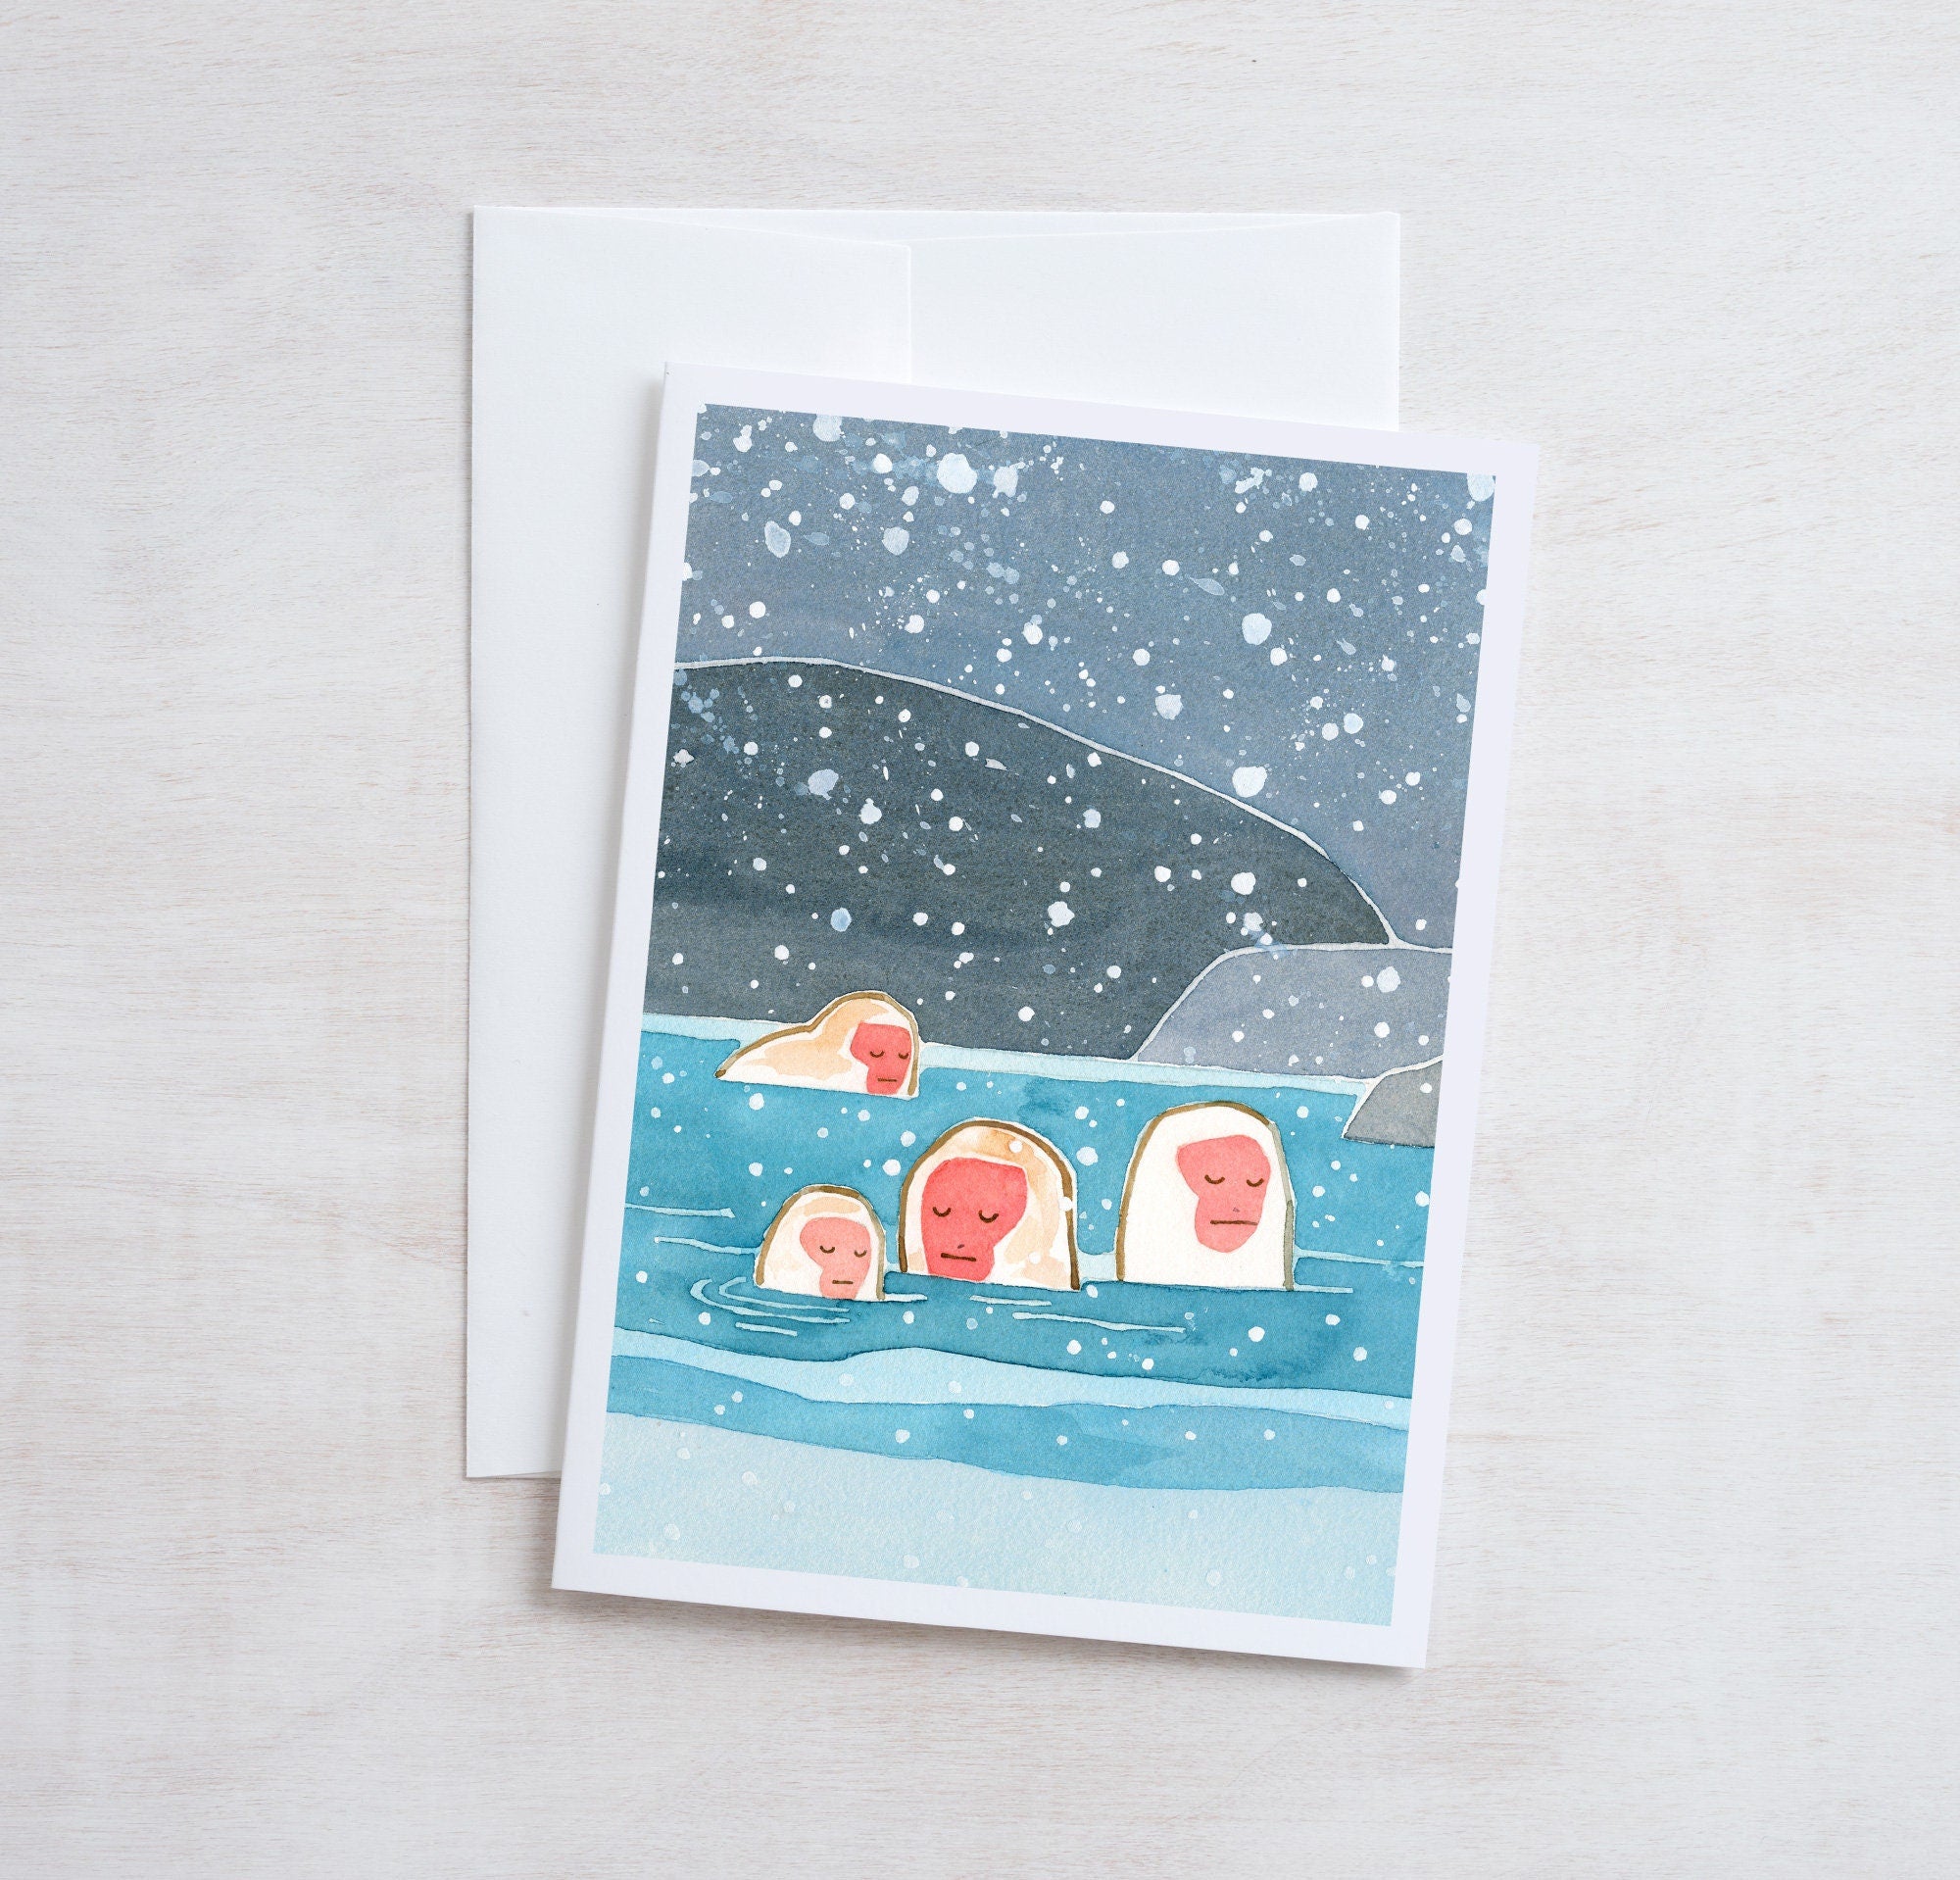 Snow Monkeys Card, Winter Holiday Animal Card, Japanese Wildlife Art